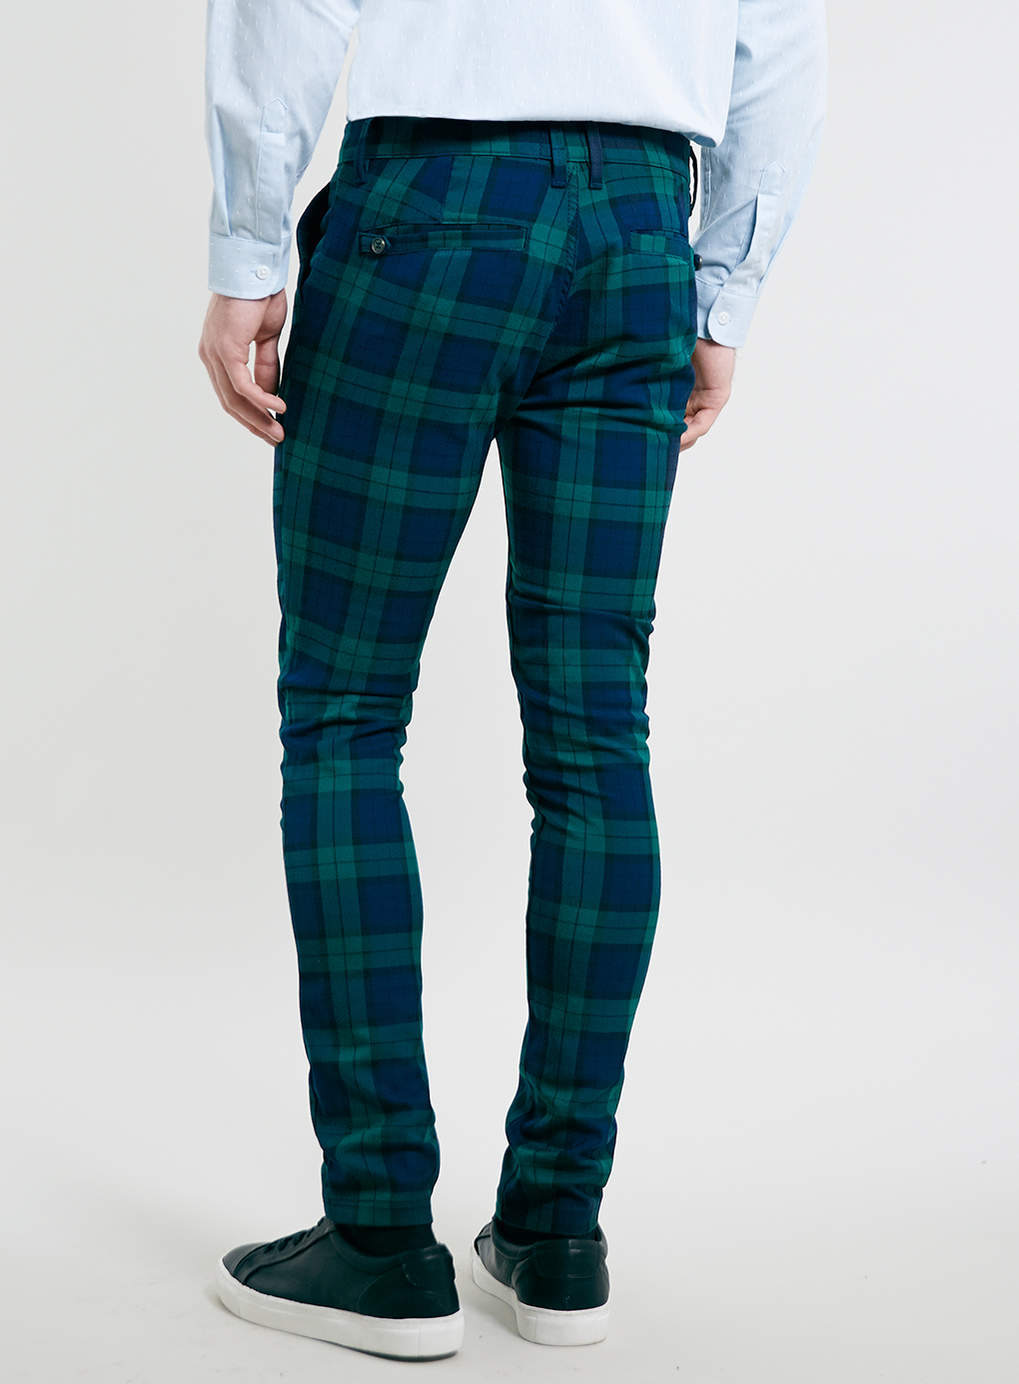 TOPMAN Green Tartan Skinny Chino Pants for Men - Lyst